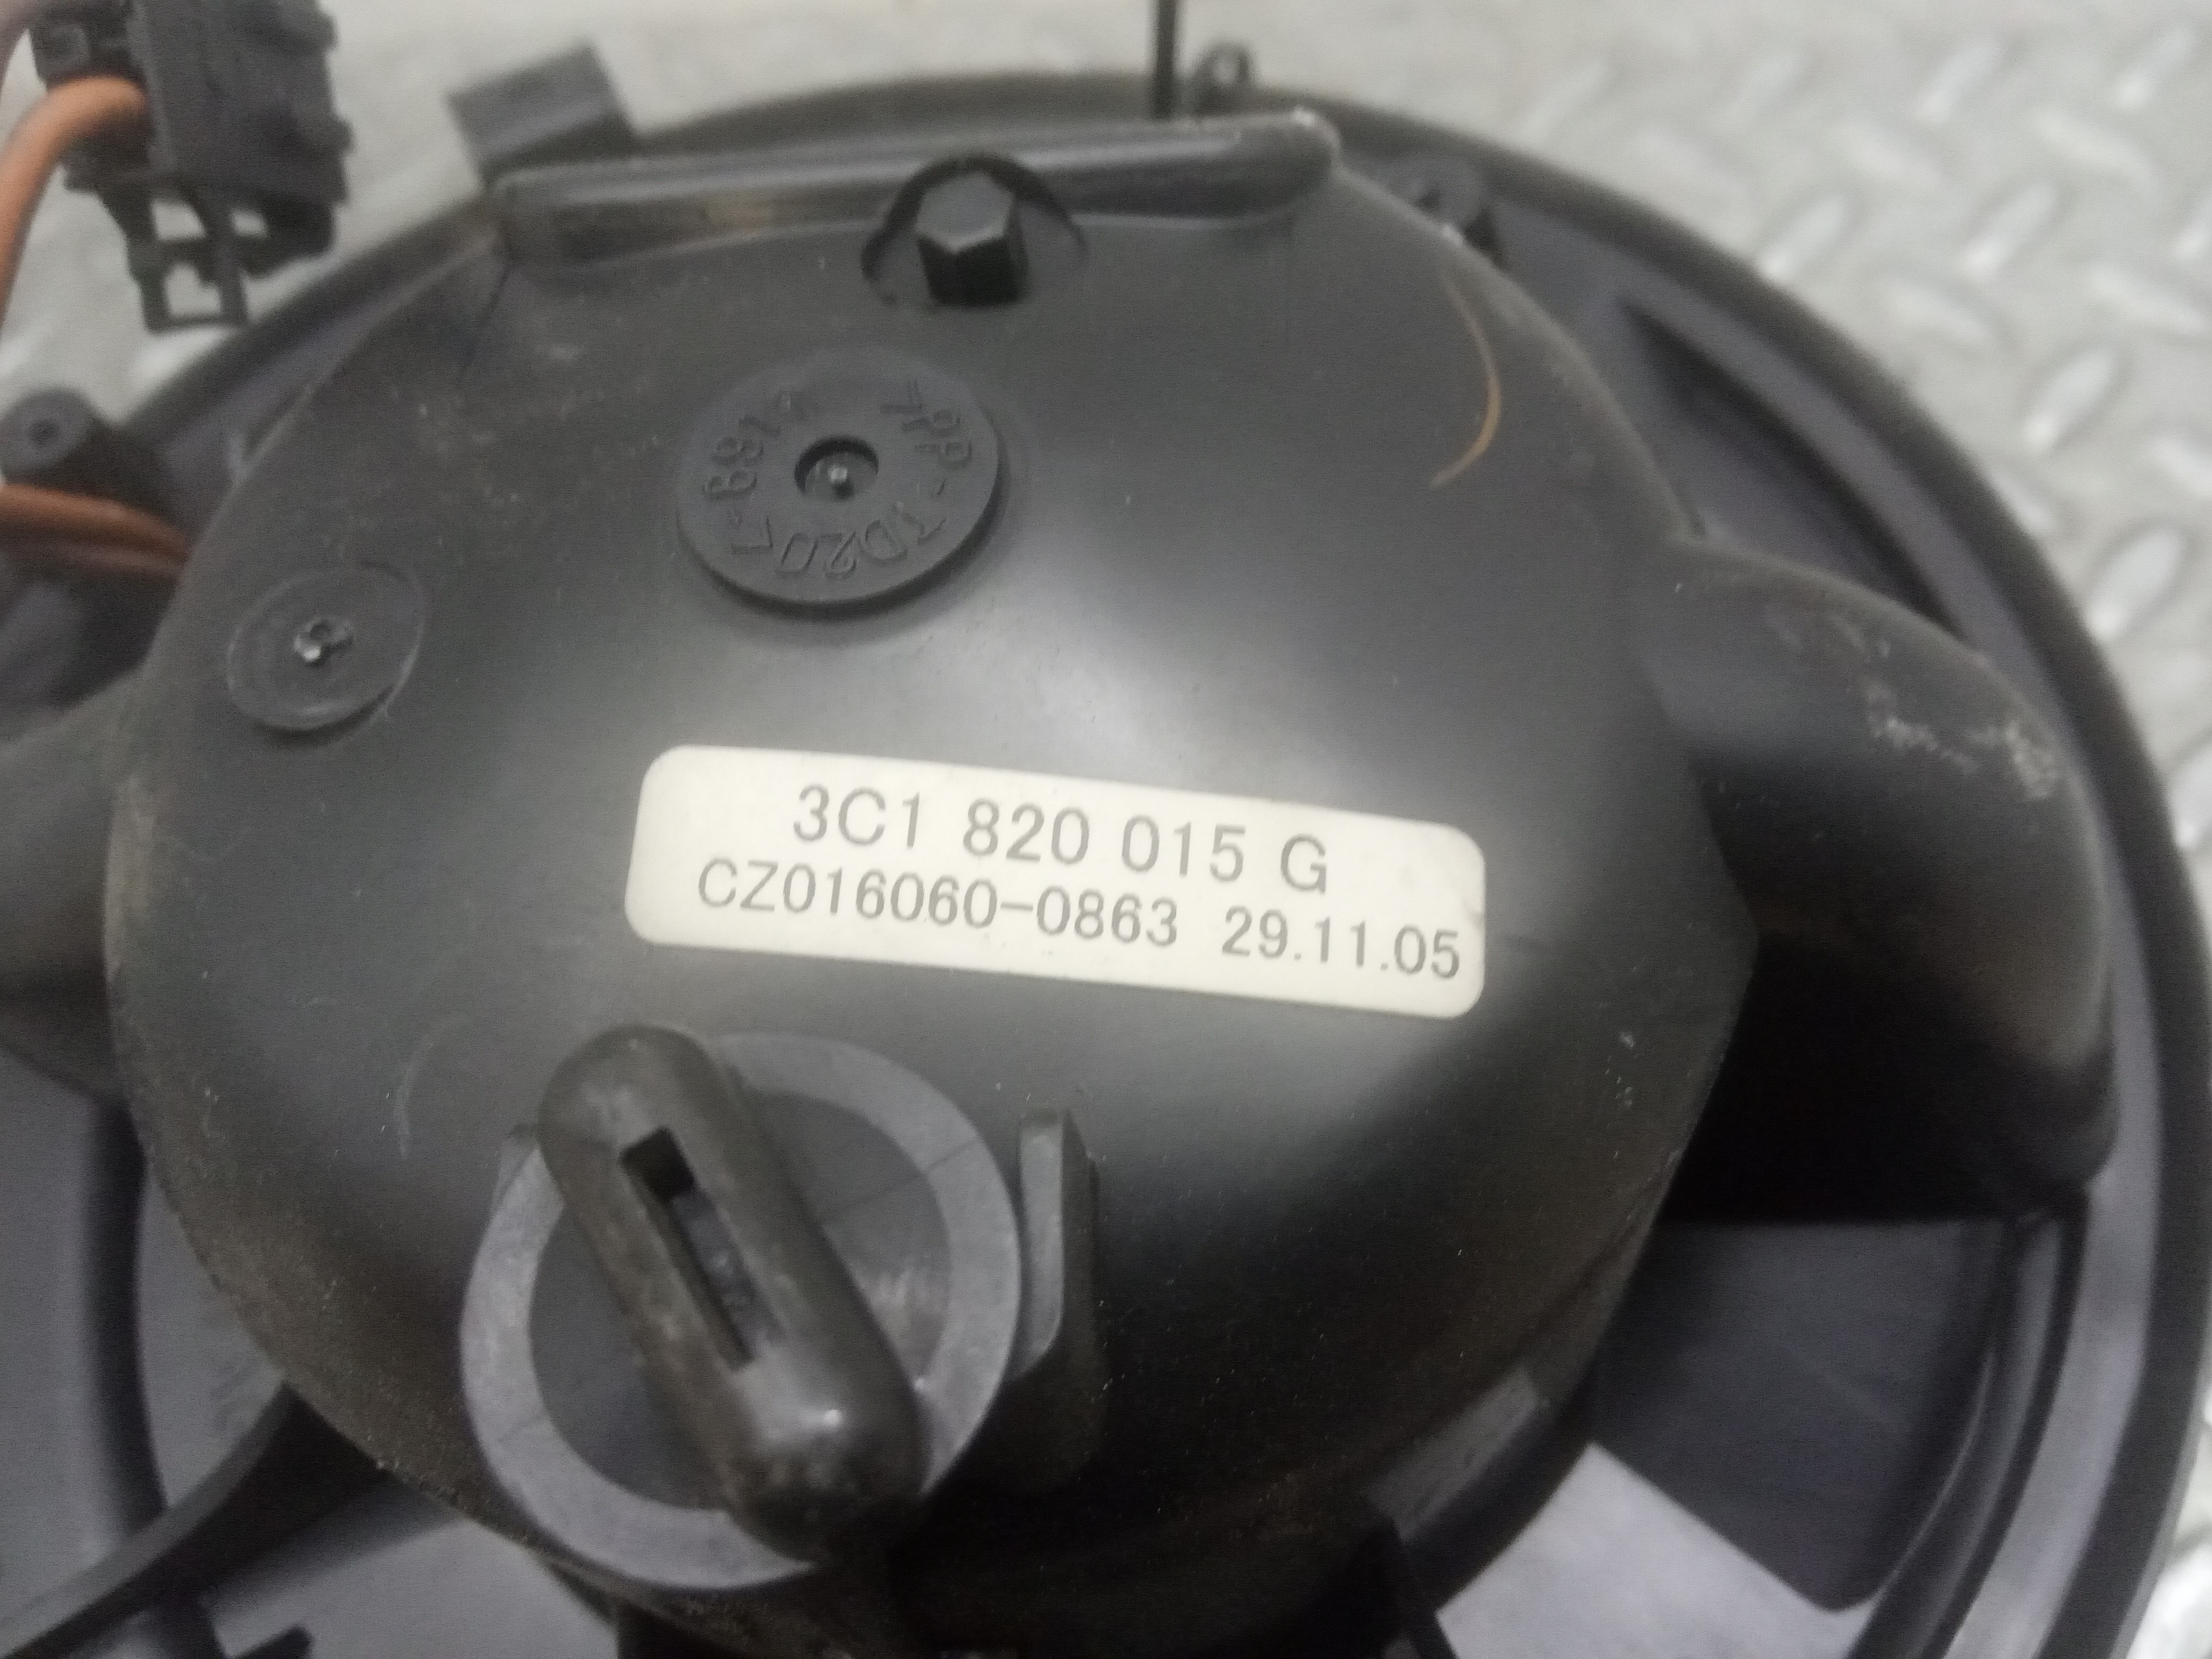 VOLKSWAGEN Passat B6 (2005-2010) Heater Blower Fan 3C1820015G, CZ0160600863 23330821